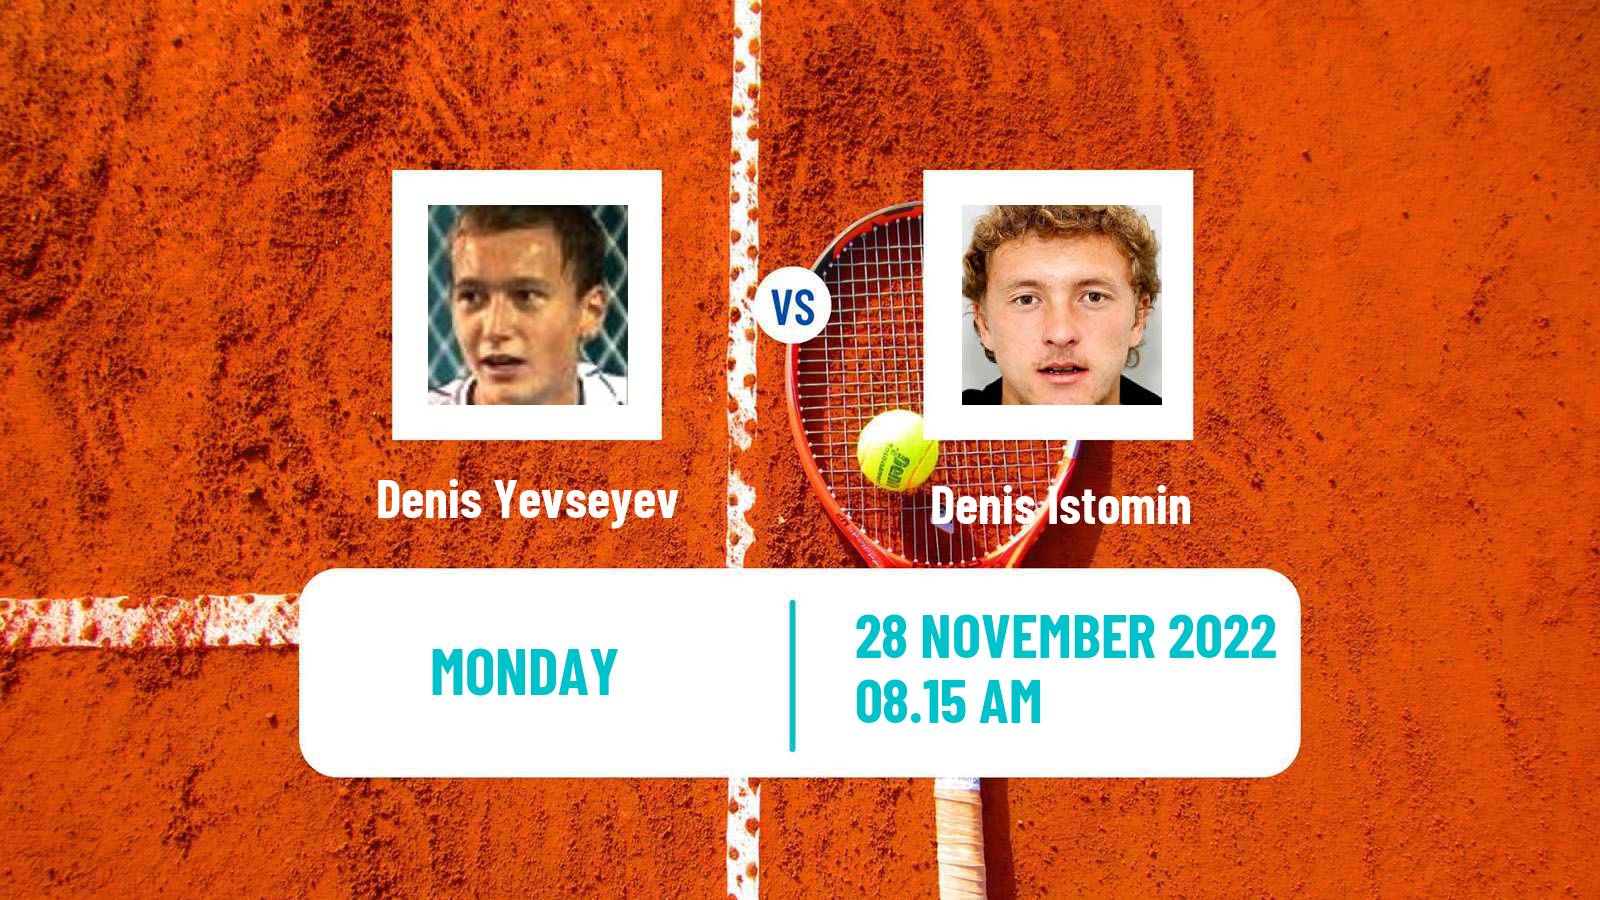 Tennis ATP Challenger Denis Yevseyev - Denis Istomin